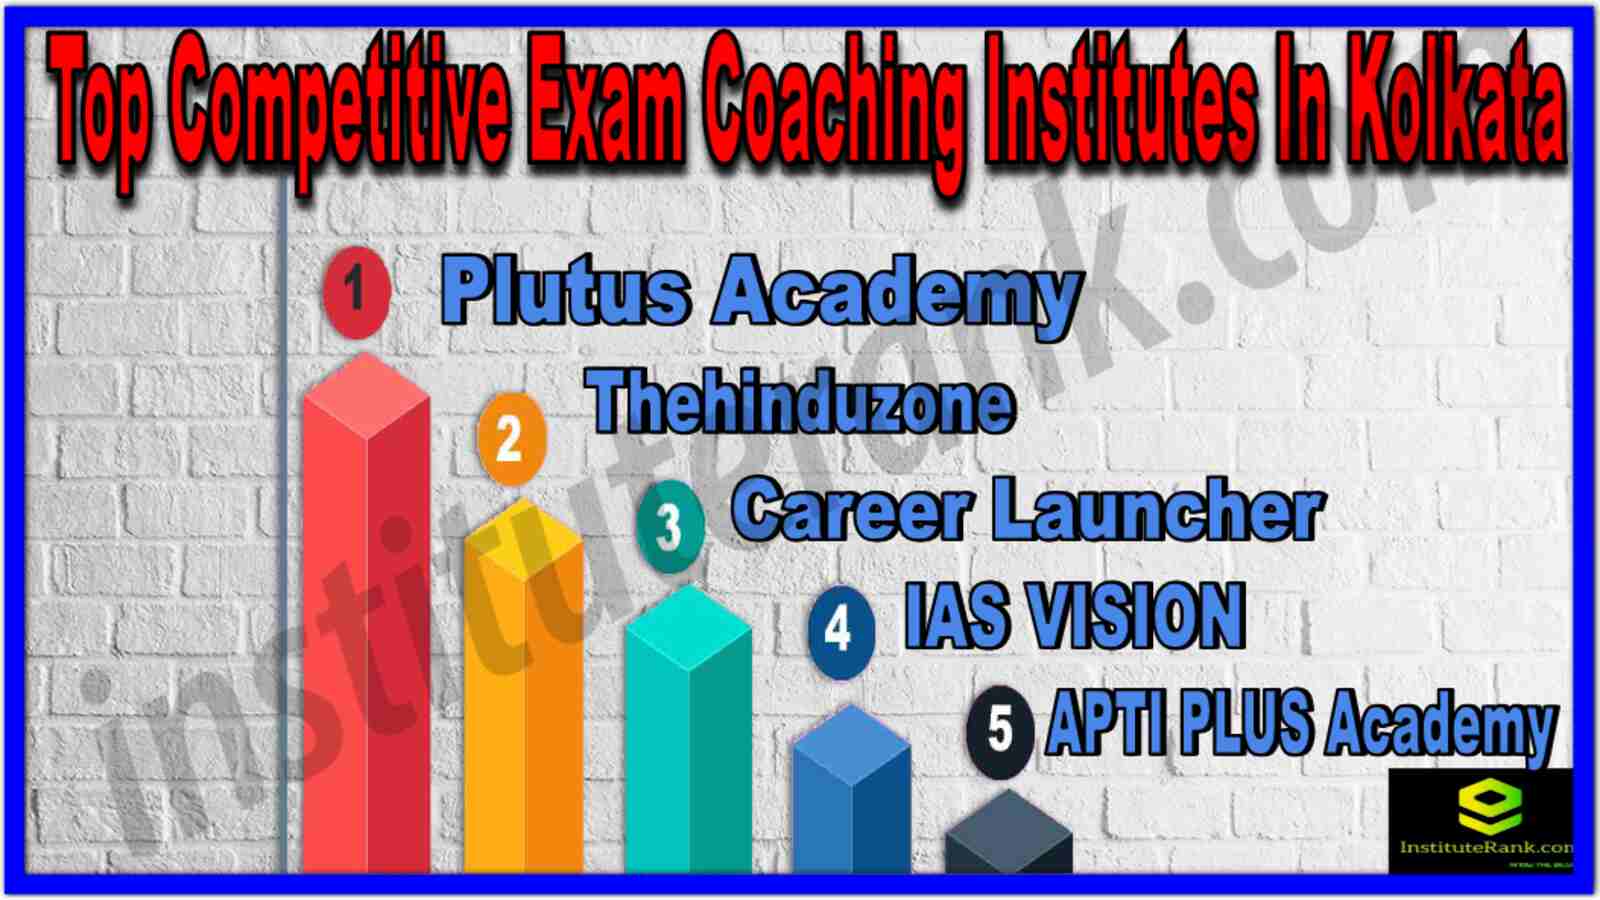 Top Competitive exam coaching institutes in Kolkata